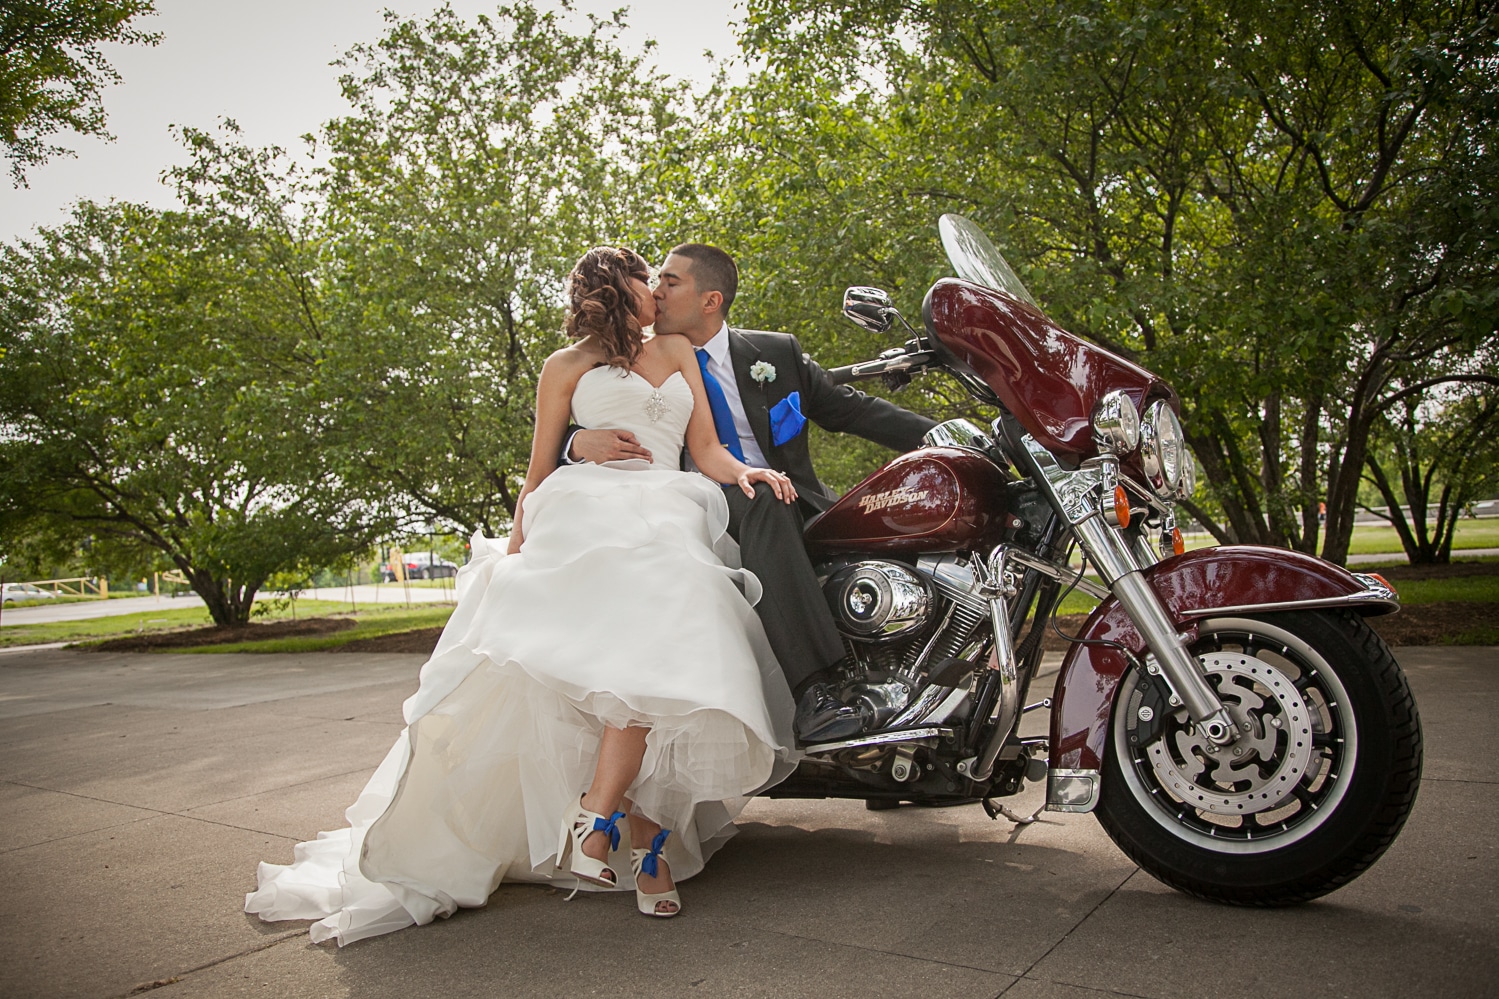 Wedding Transportation: Ride in style